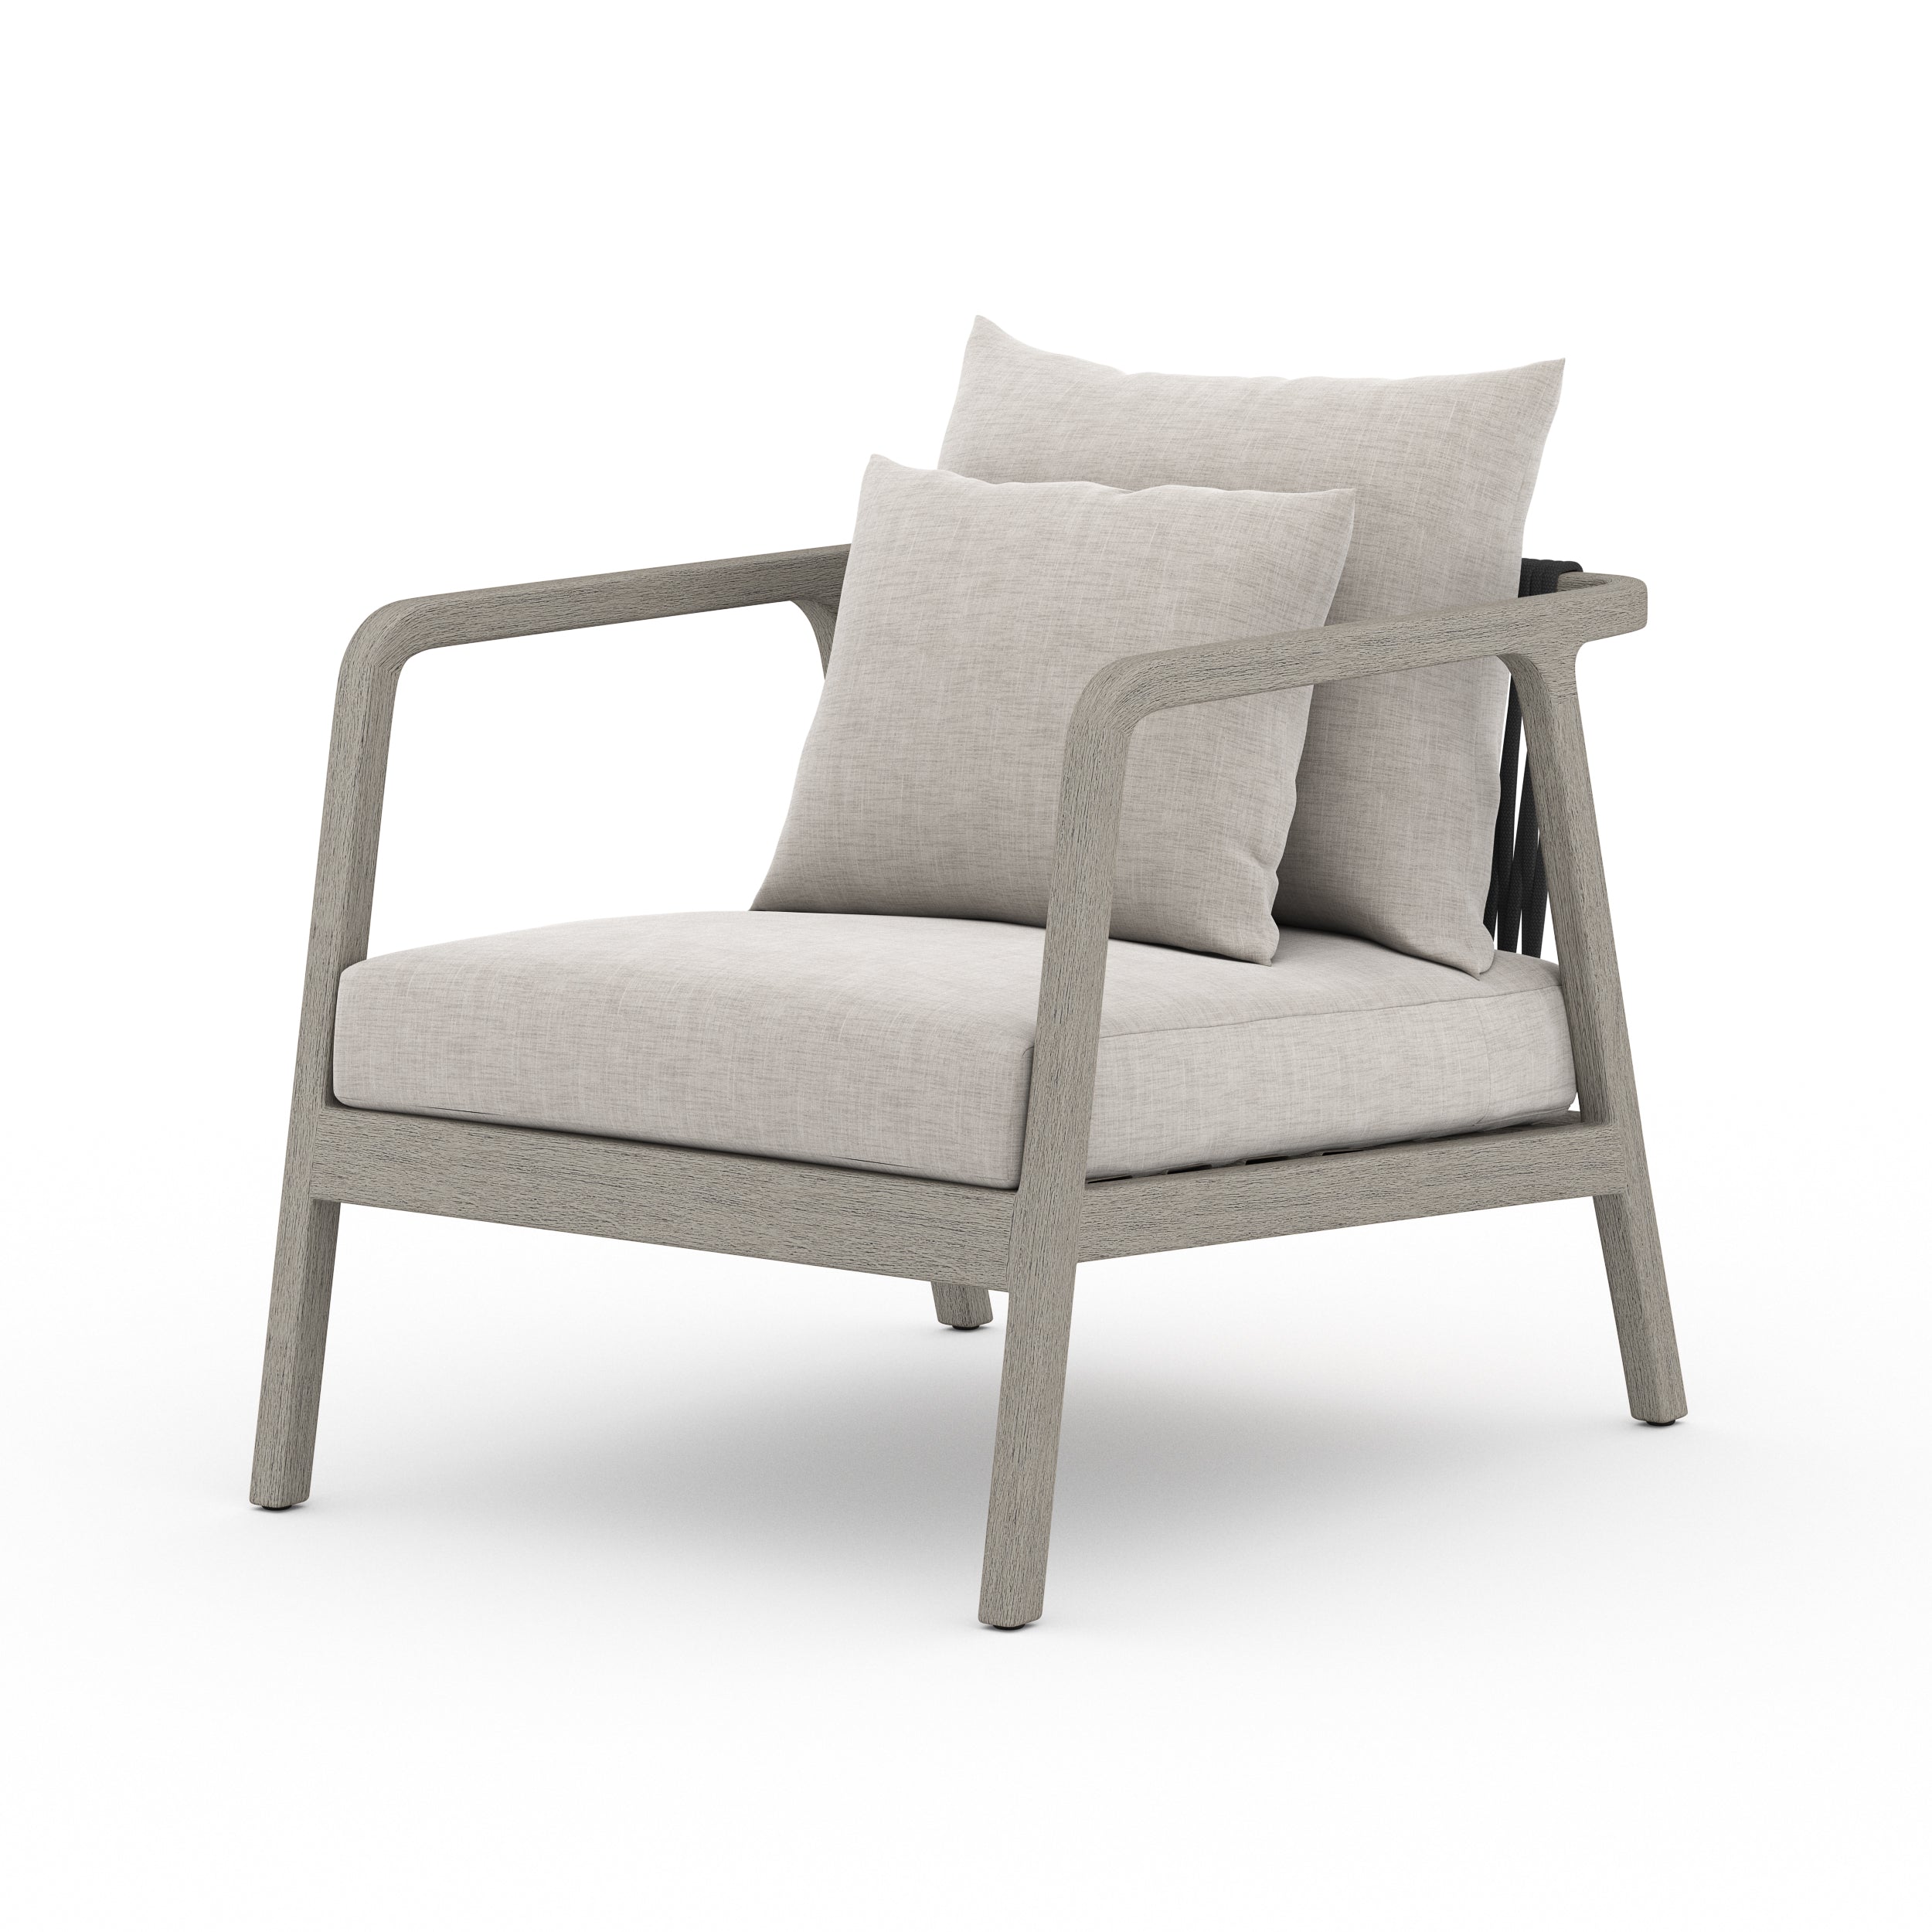 Numa Outdoor Chair - Weathered Grey